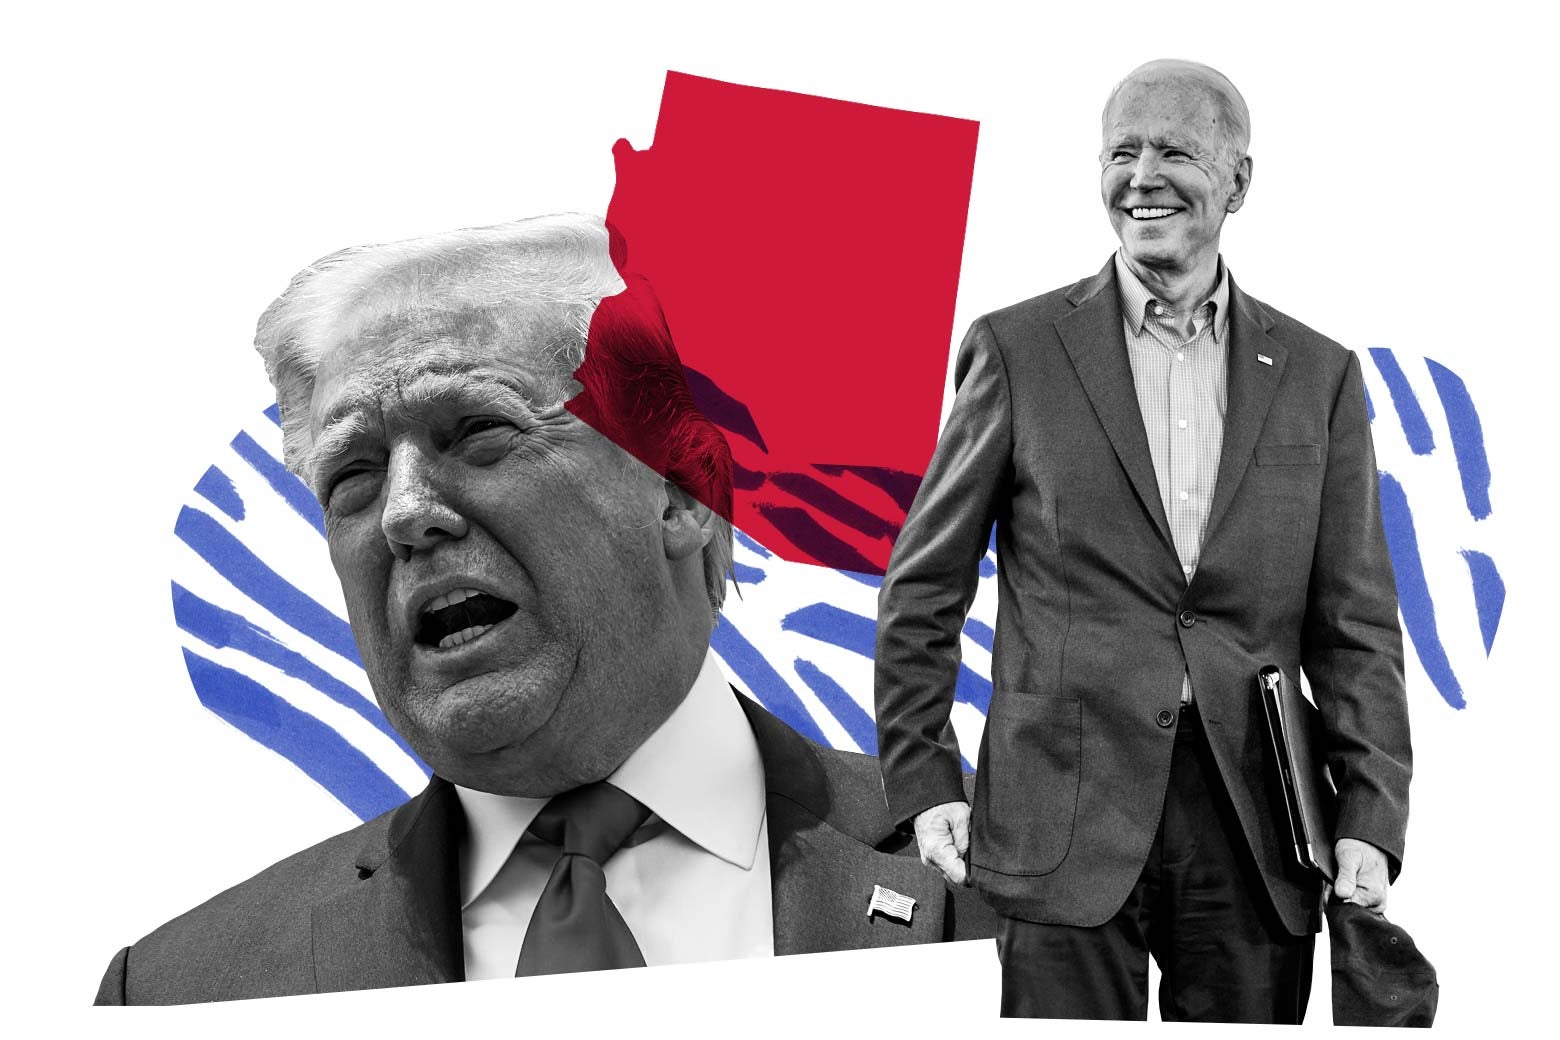 Donald Trump, Joe Biden, and the state of Arizona.